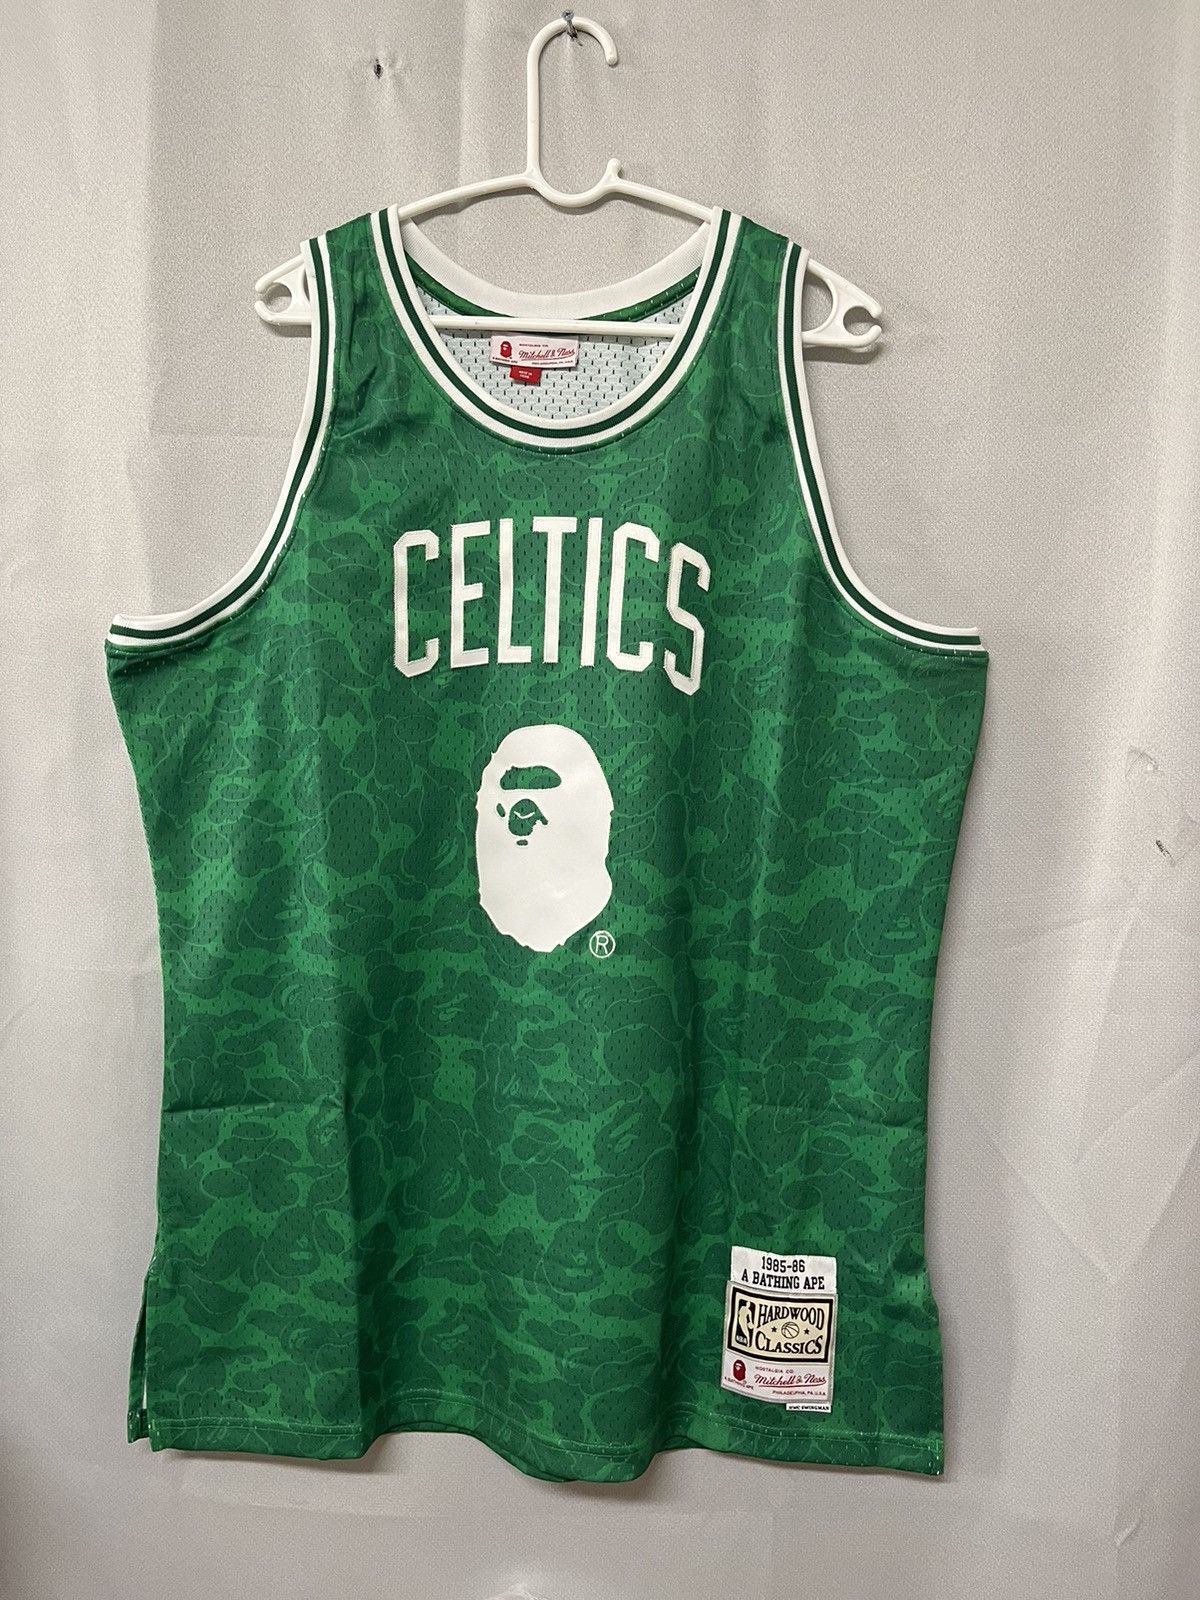 Bape Bape x Mitchell & Ness Celtics Swingman Jersey | Grailed